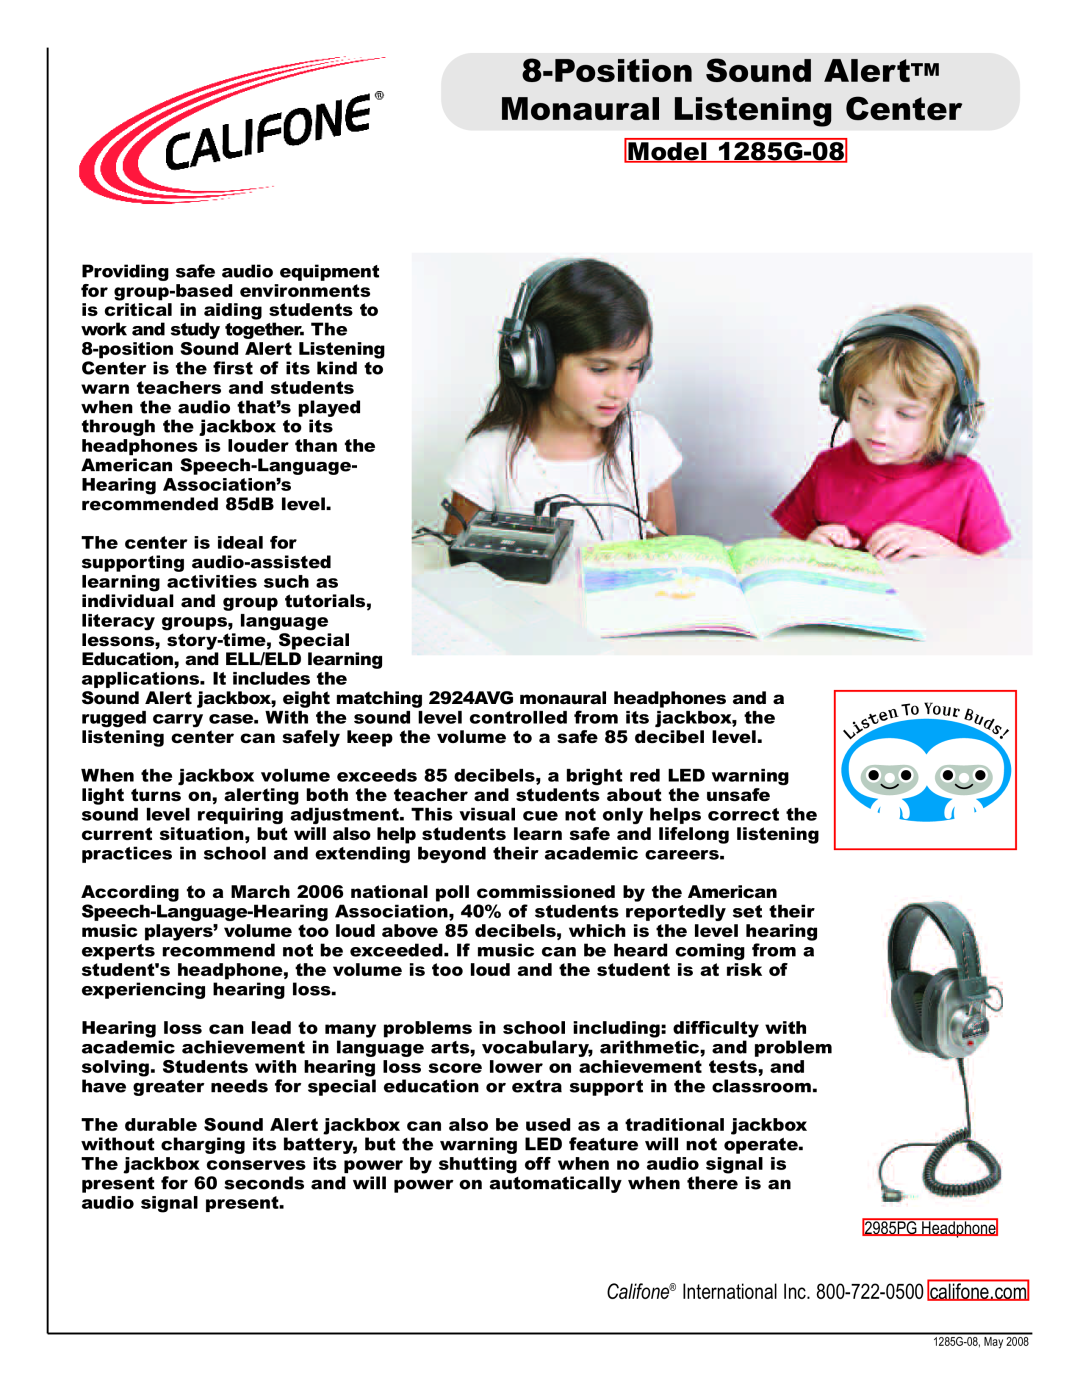 Califone manual PositionSound AlertTM Monaural Listening Center, Model 1285G-08 